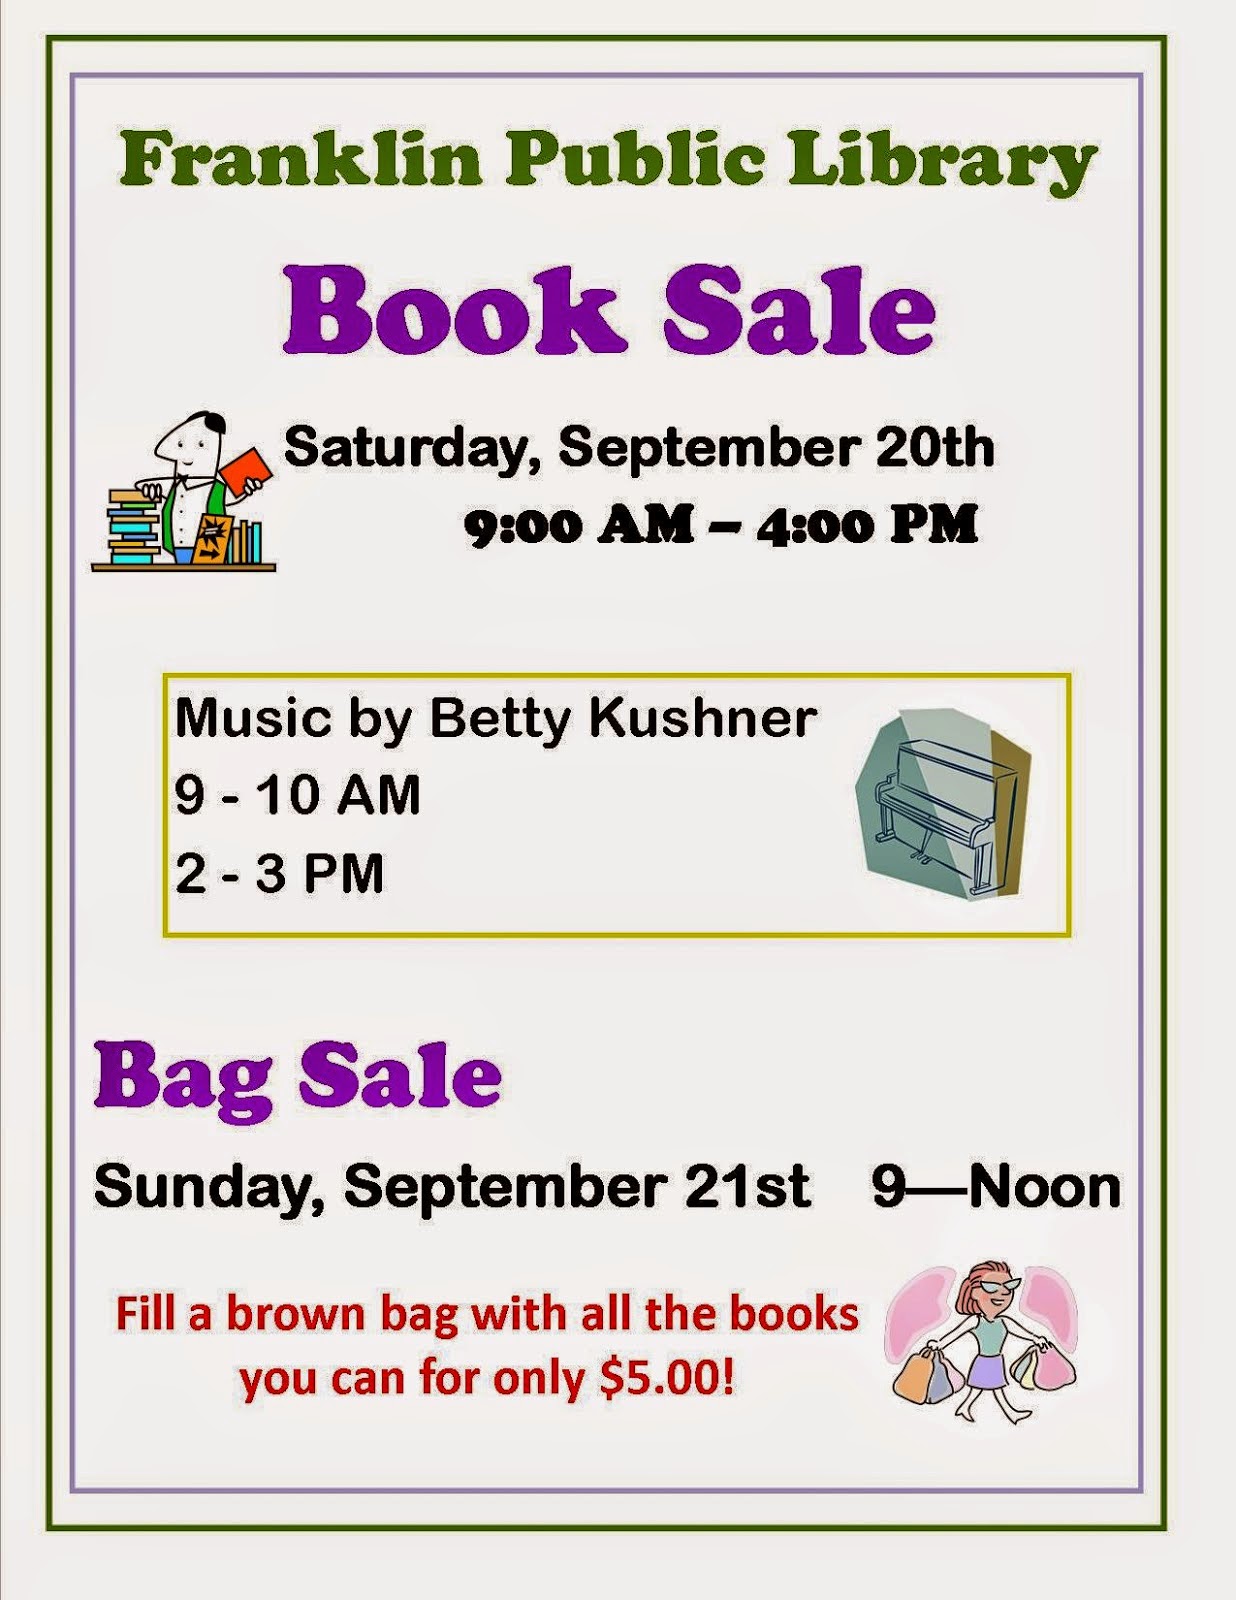 Franklin Public Library - Book Sale